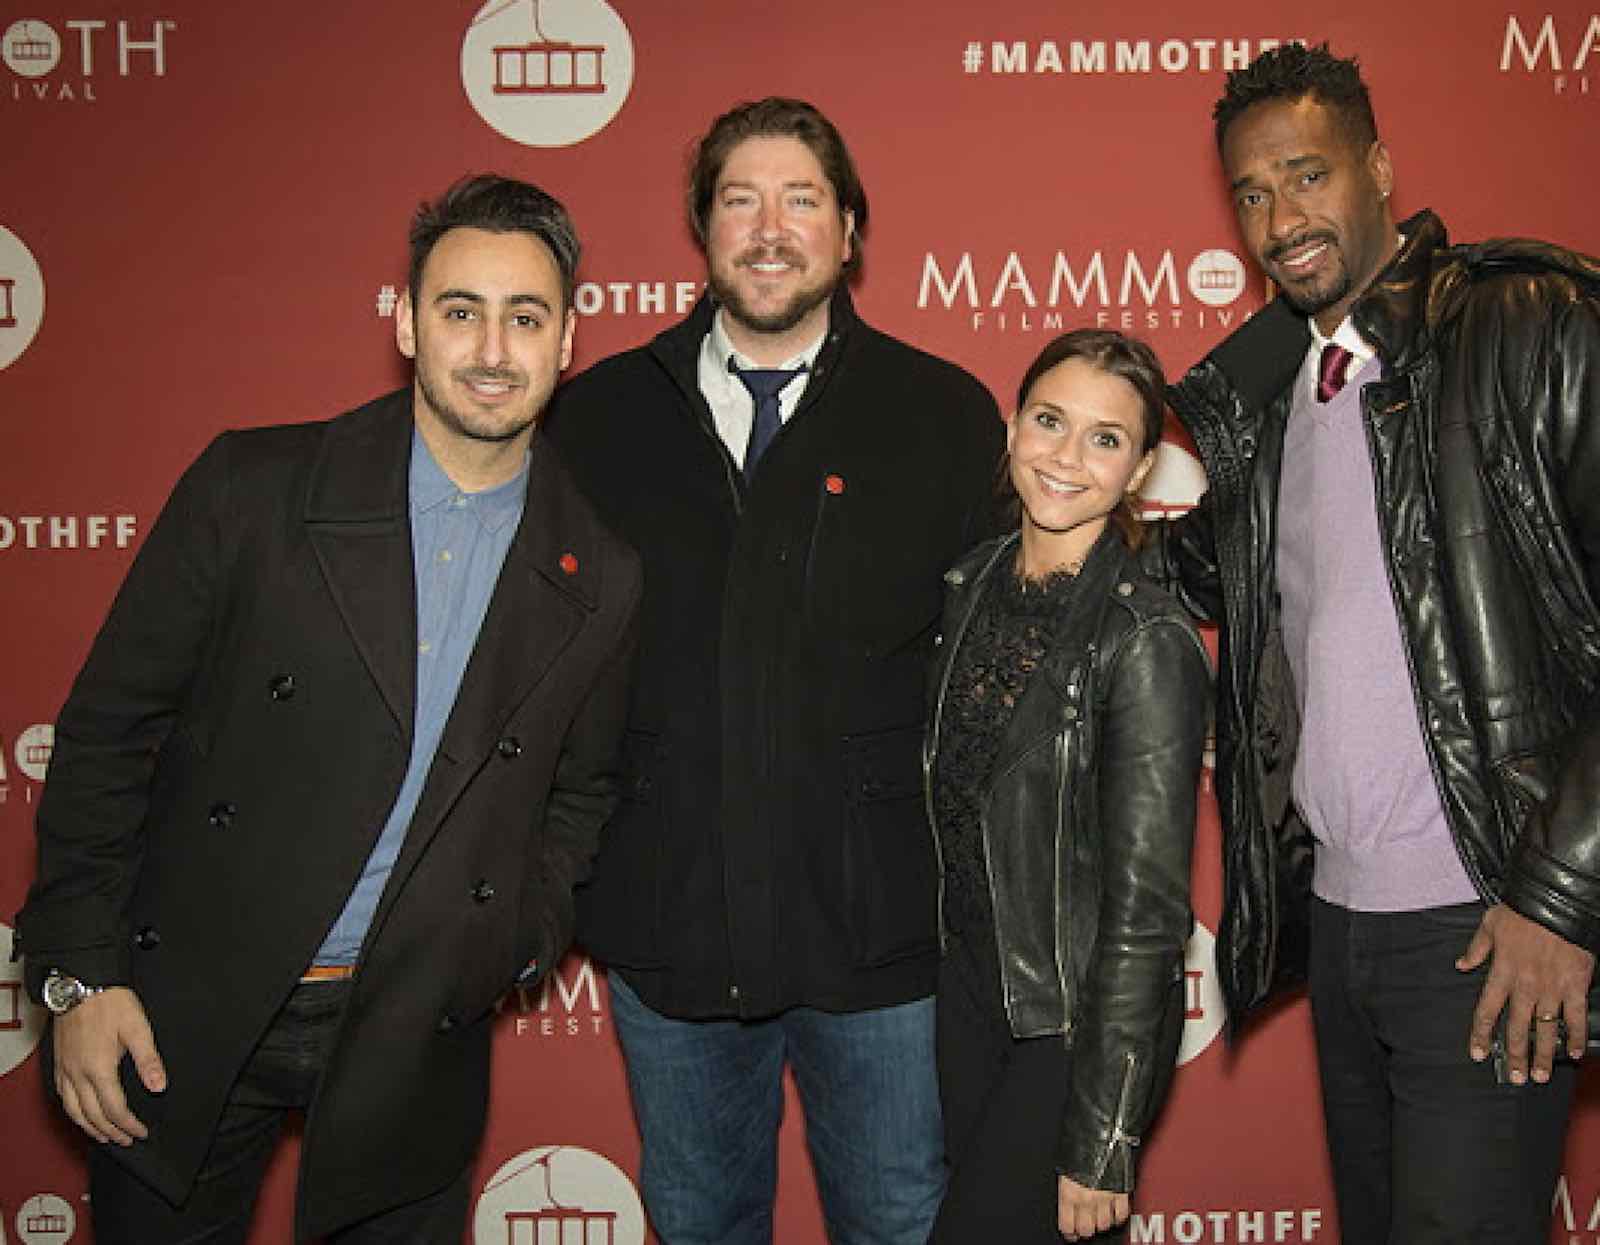 Mammoth Film Festival is boasting an allstar lineup this year Film Daily